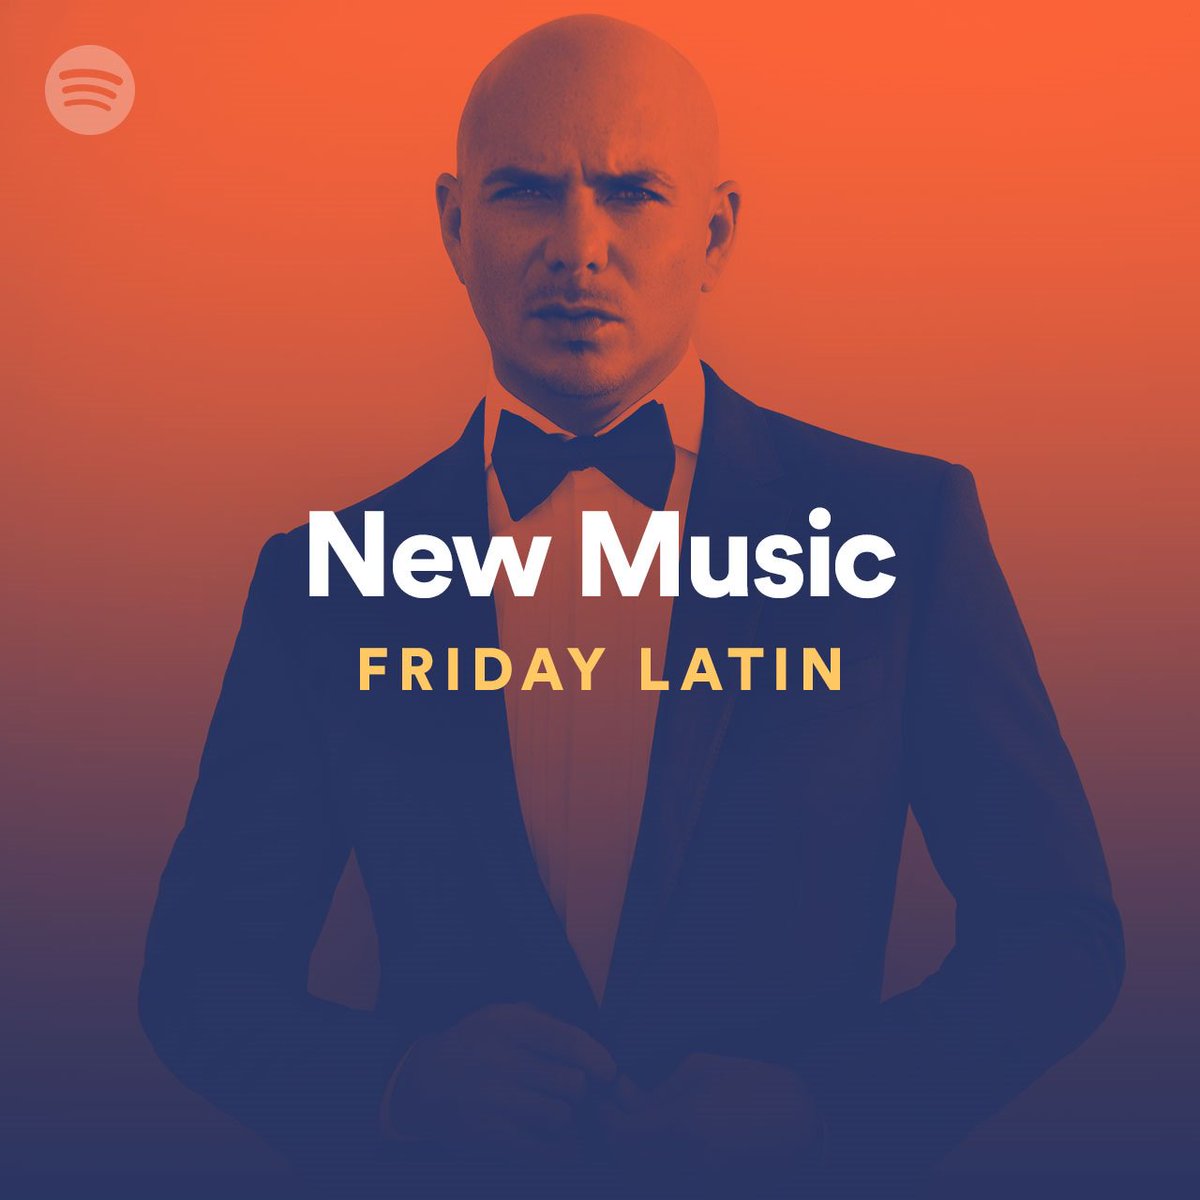 Appreciate that “Options” is on Spotify’s New Music Fridays Latin playlist #happyfriday https://t.co/rIlQaB5SSP https://t.co/Ylb80TMvPN